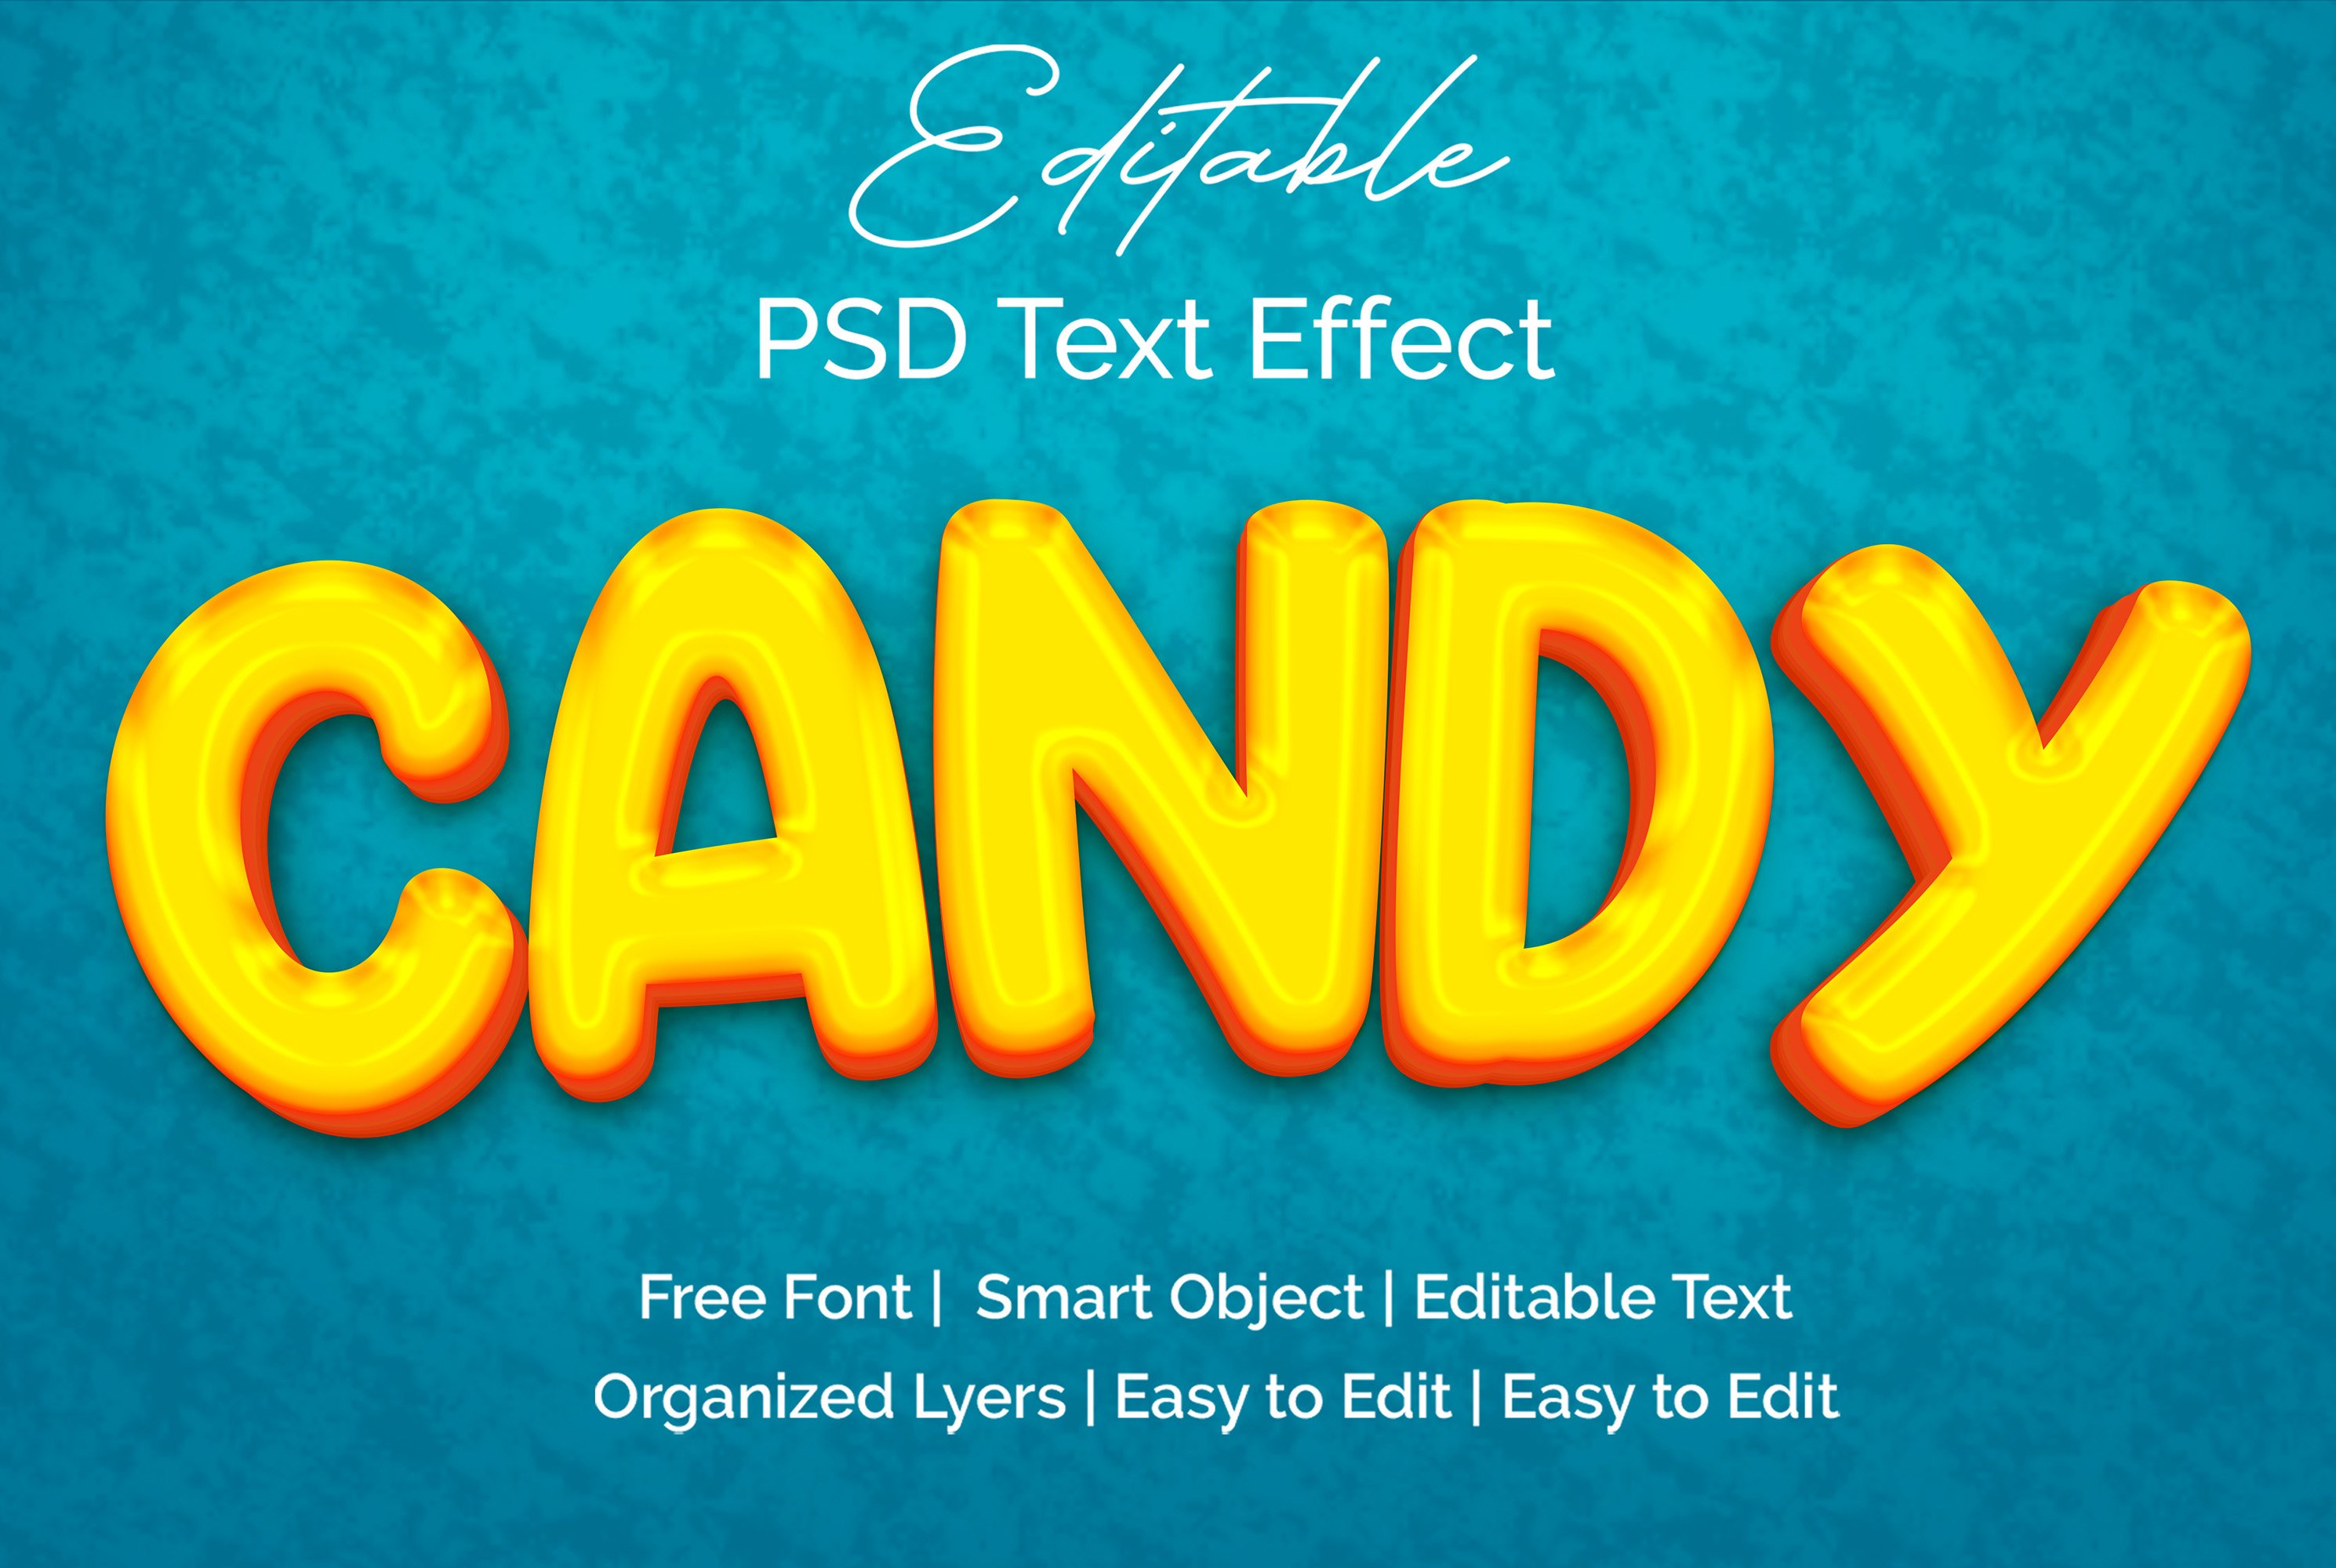 Photoshop 3D Editable Text Effectpreview image.